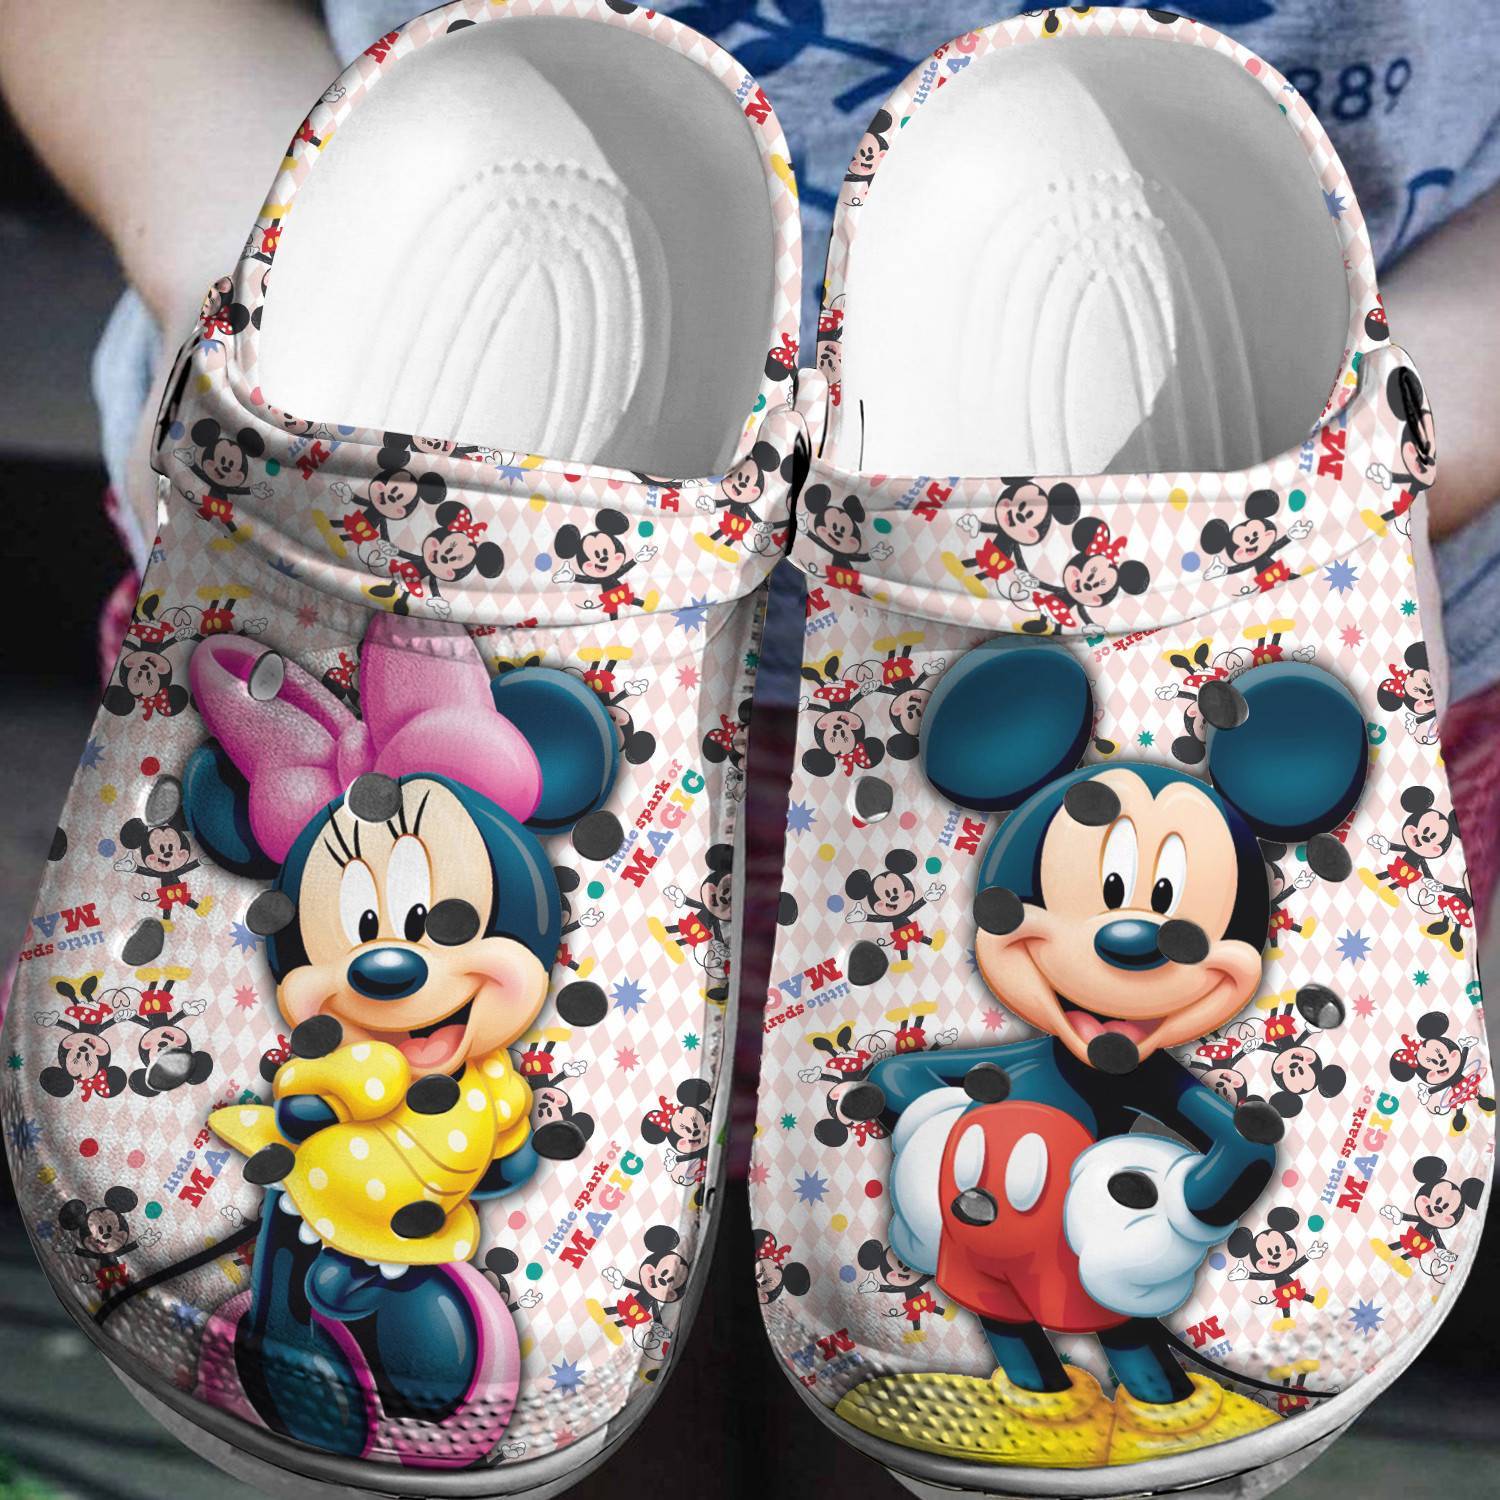 Disney Fan Favorites: Mickey Minnie Crocs 3D Clog Shoes – Show Your Disney Love